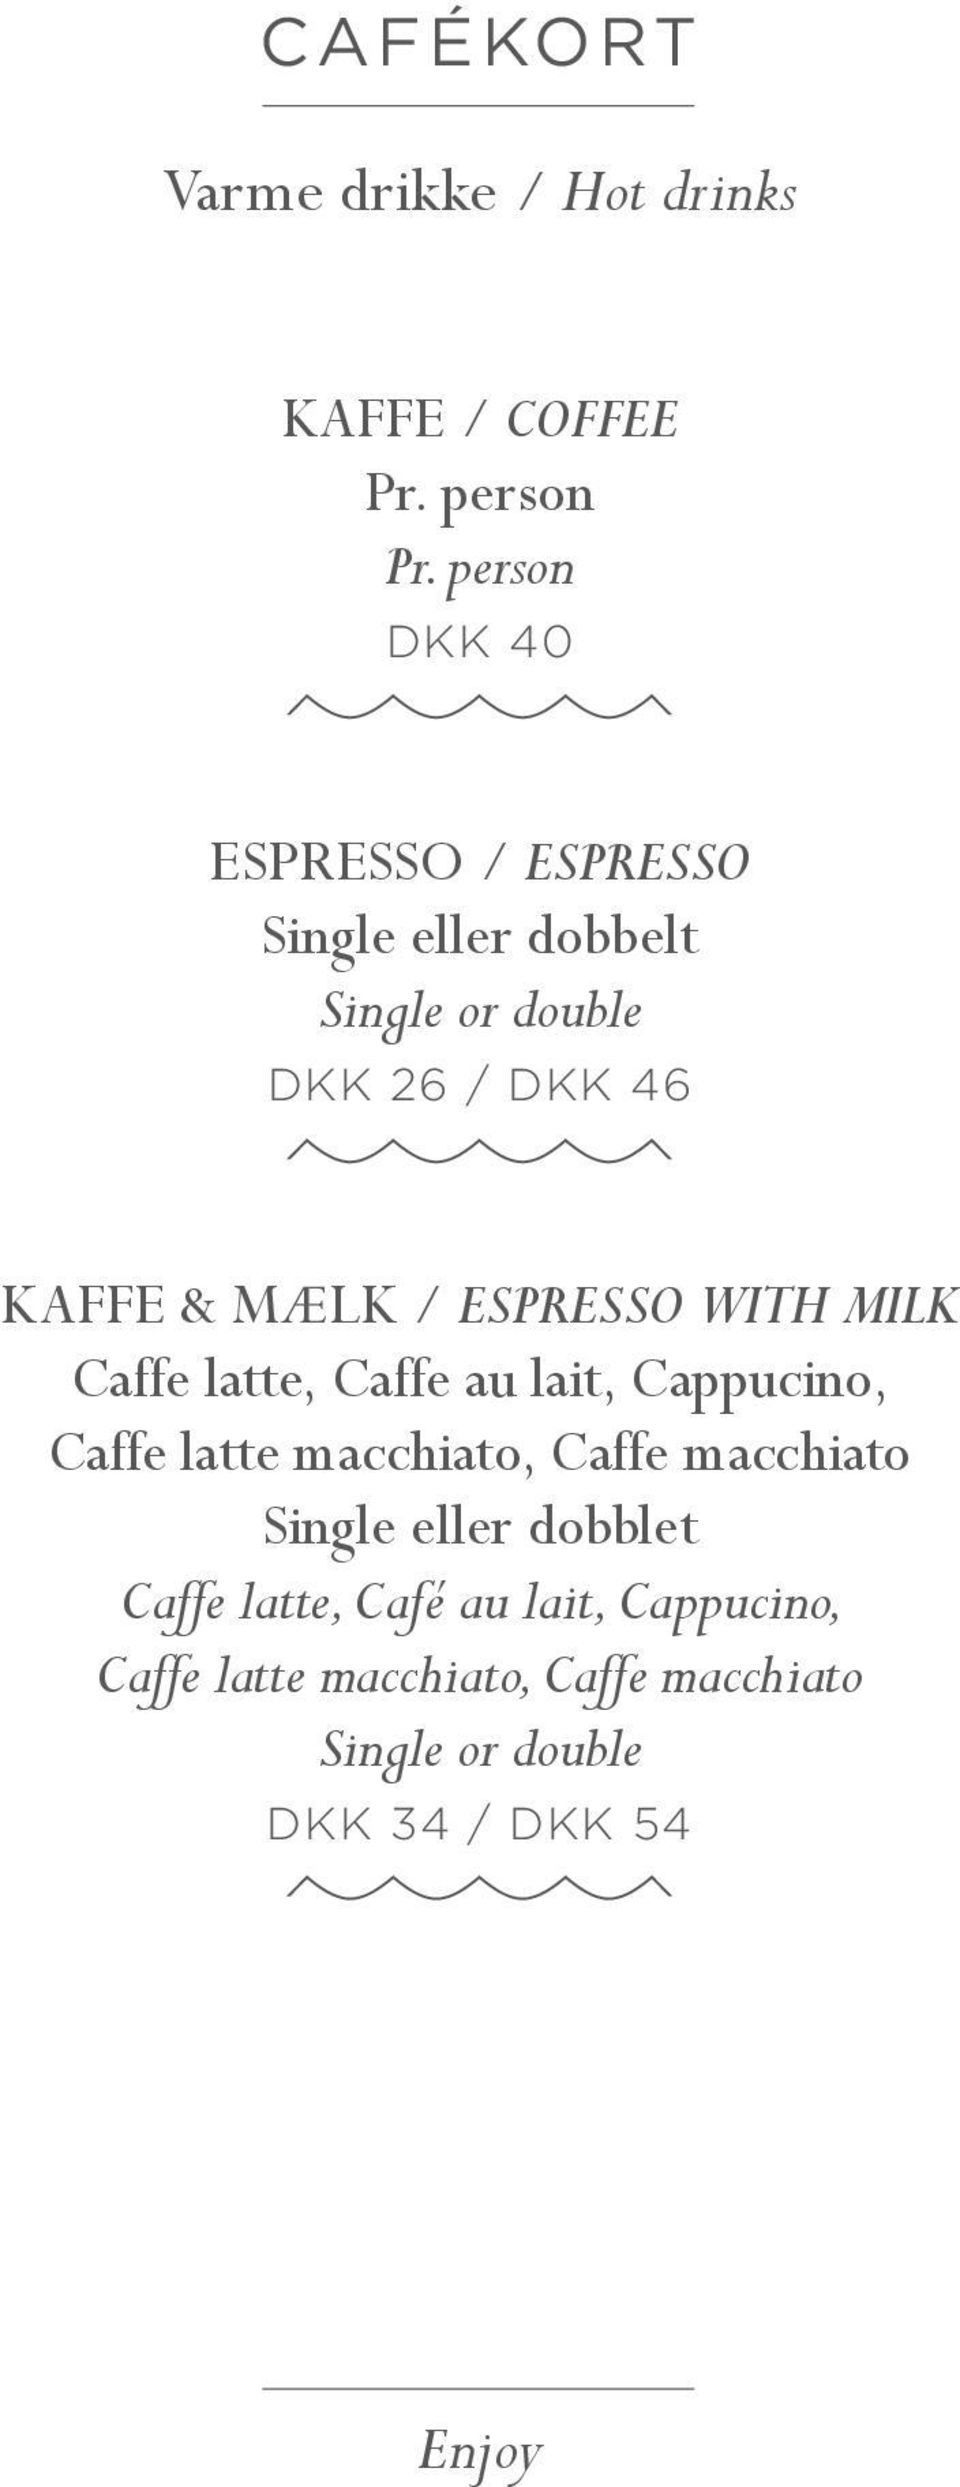 MÆLK / ESPRESSO WITH MILK Caffe latte, Caffe au lait, Cappucino, Caffe latte macchiato, Caffe